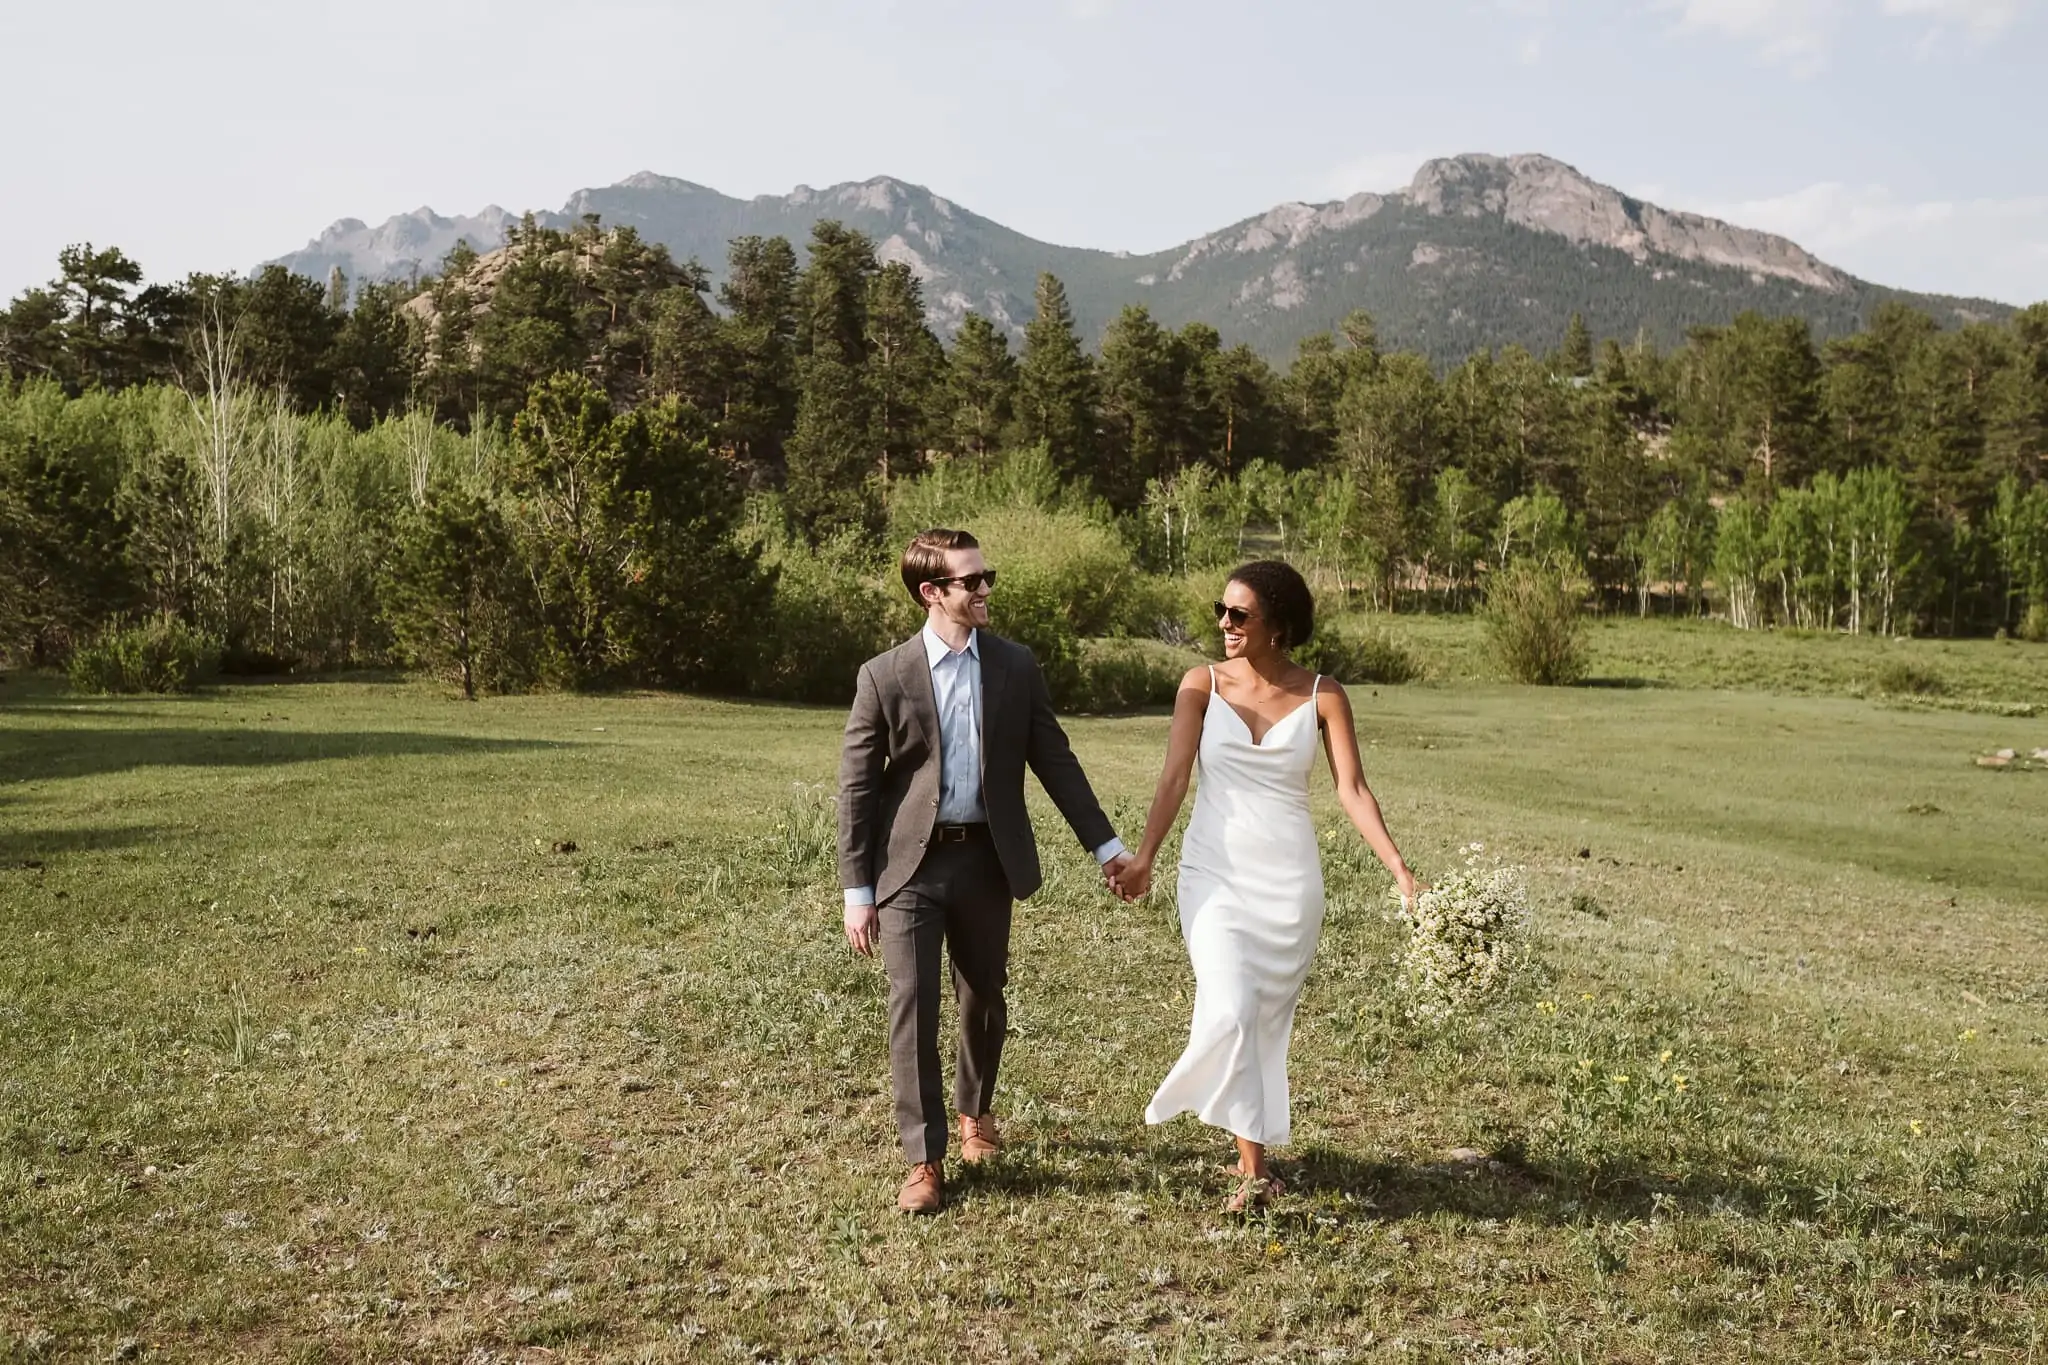 Meeker Park Lodge wedding inspiration in Allenspark, Colorado.